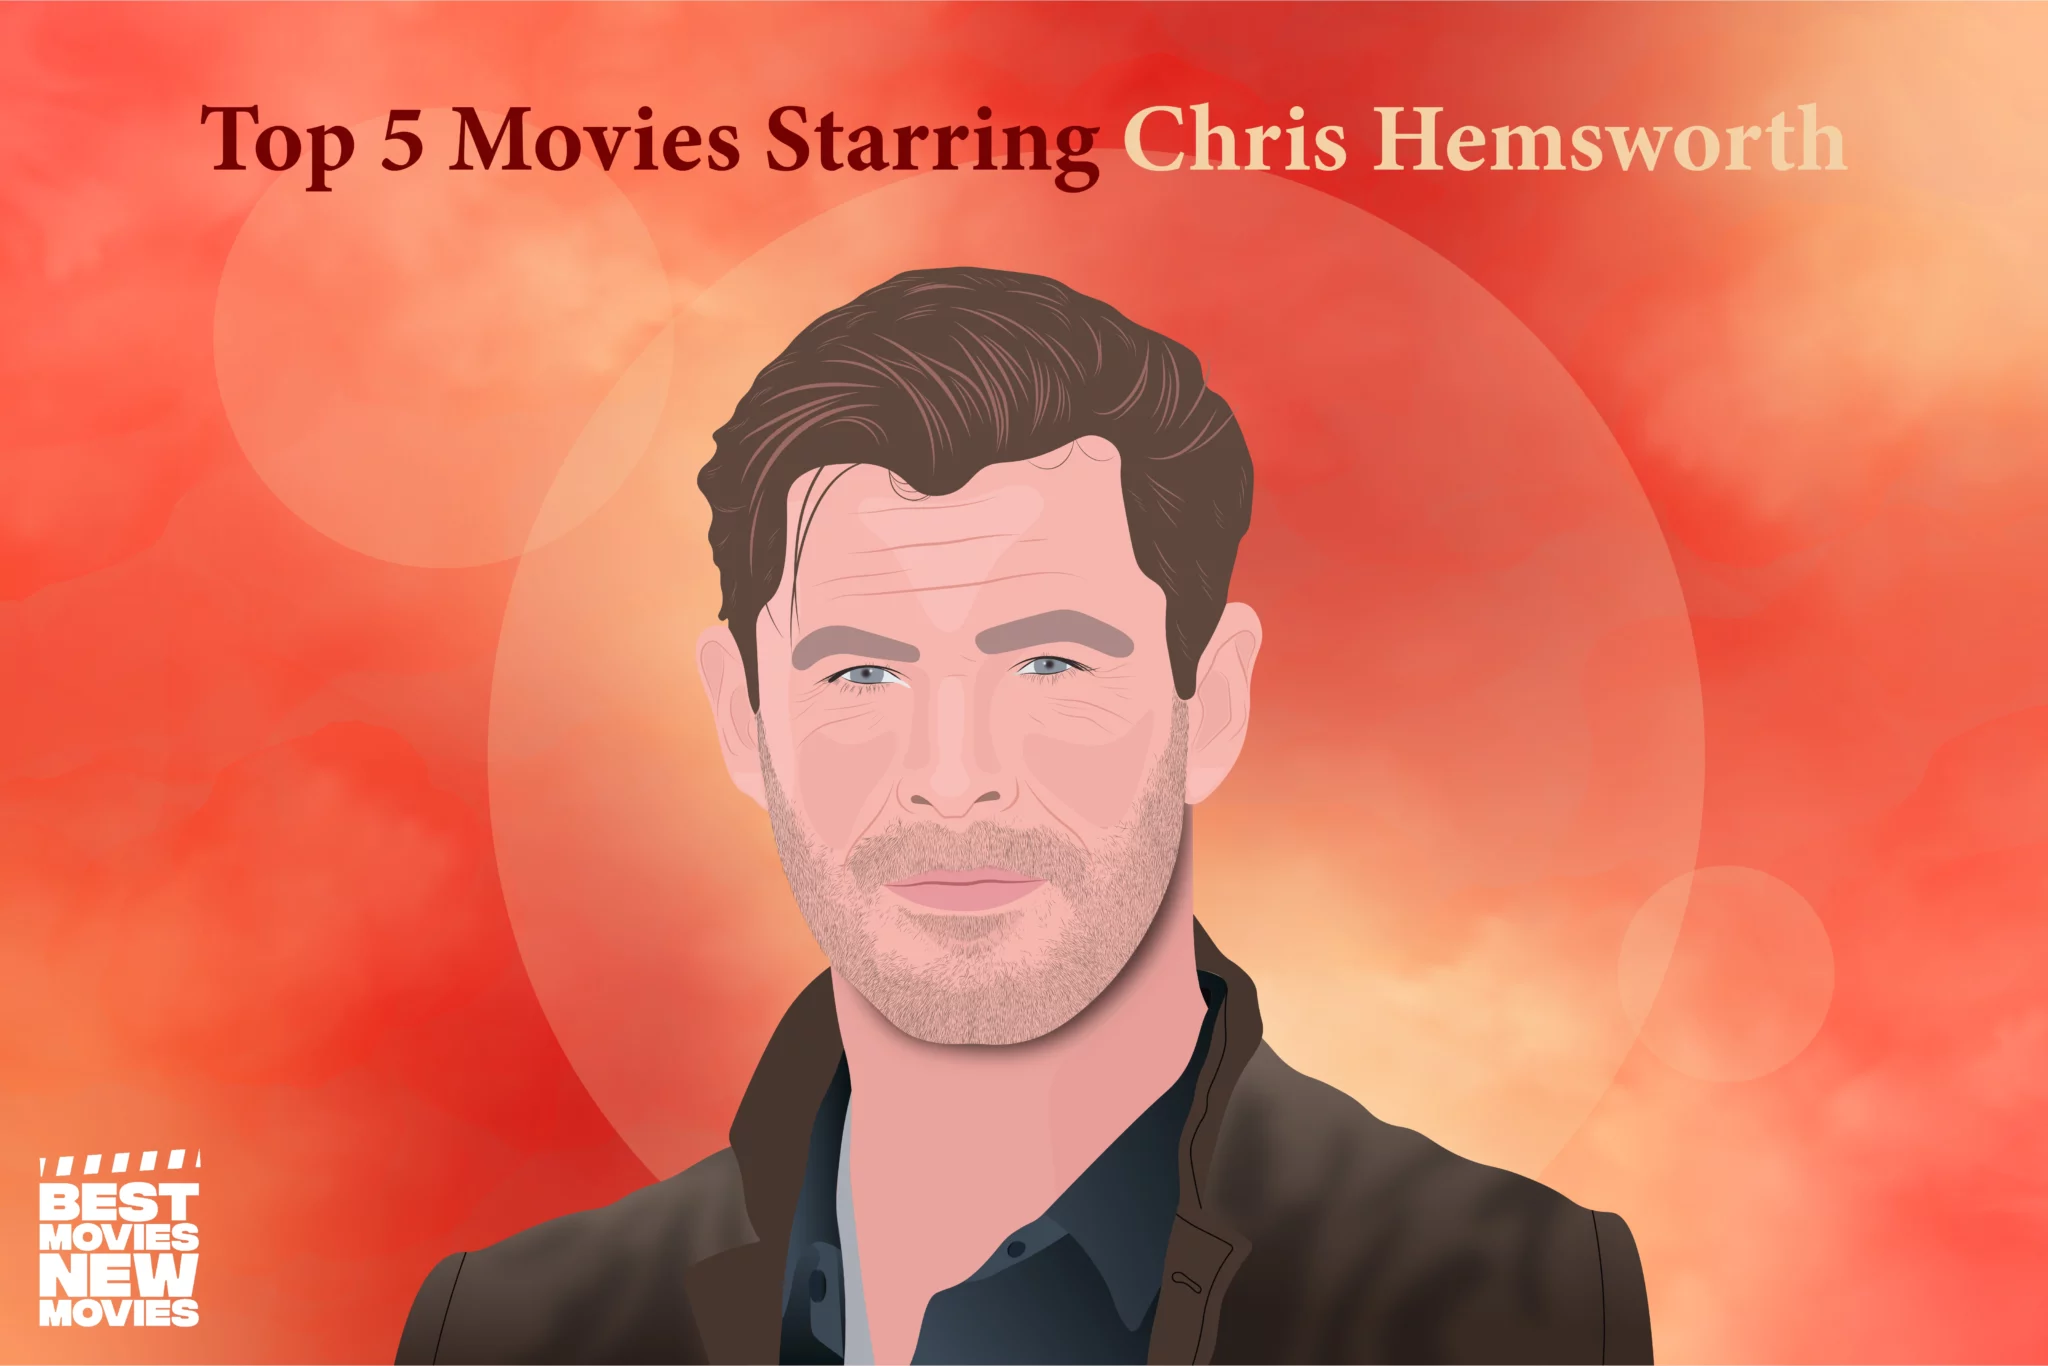 Top 5 Movies Starring Chris Hemsworth